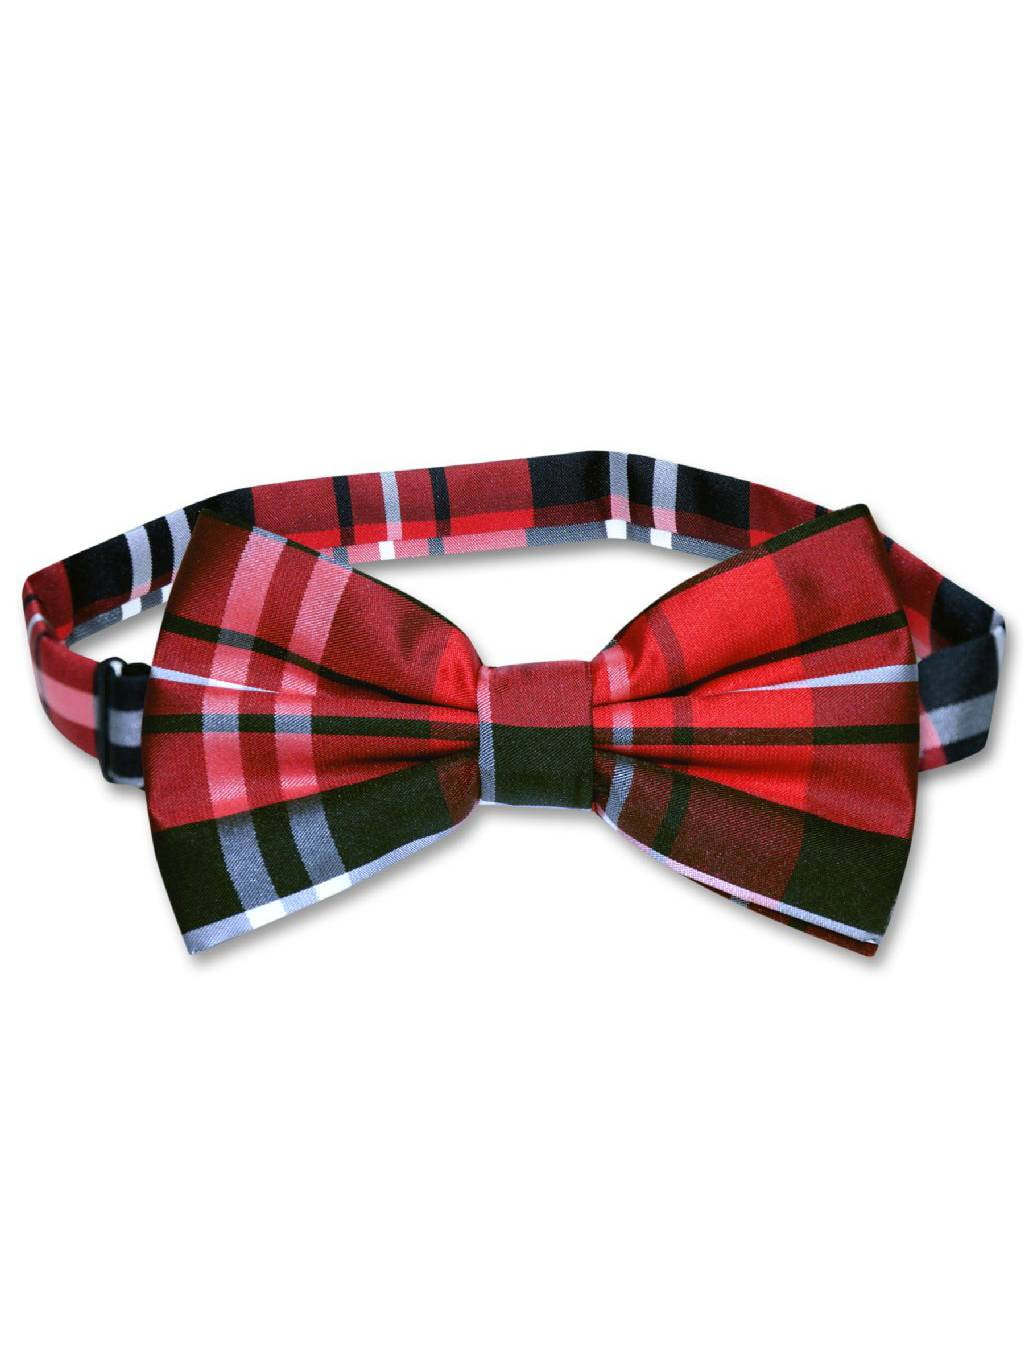 Cummerbund and Hanky Set 15 Tartan-Red/Green/Black Squares Polyester Bow Tie 